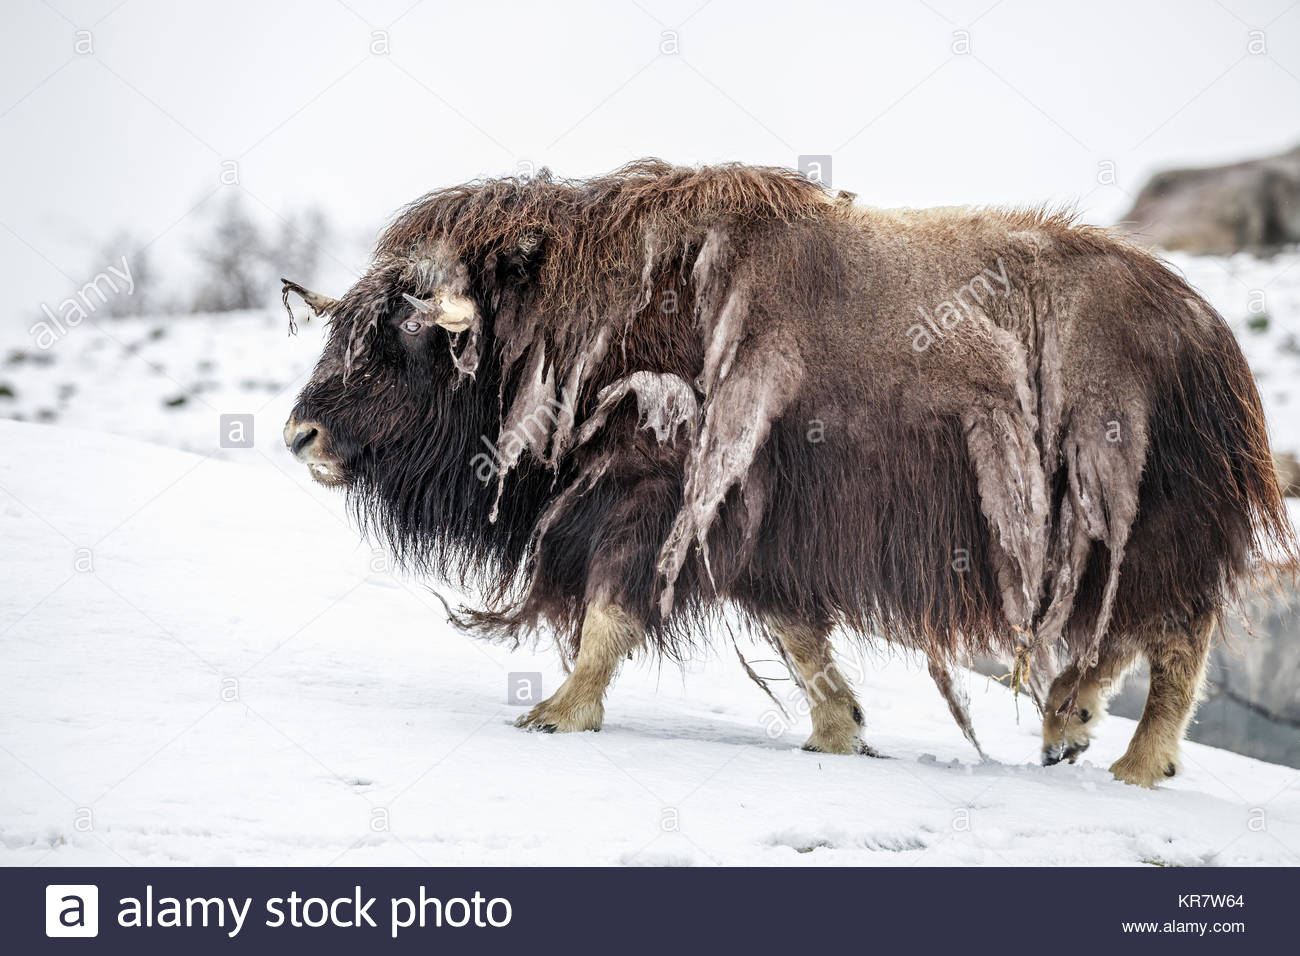 Arctic Tundra: Musk Oxen | Arctic tundra animals, Arctic 